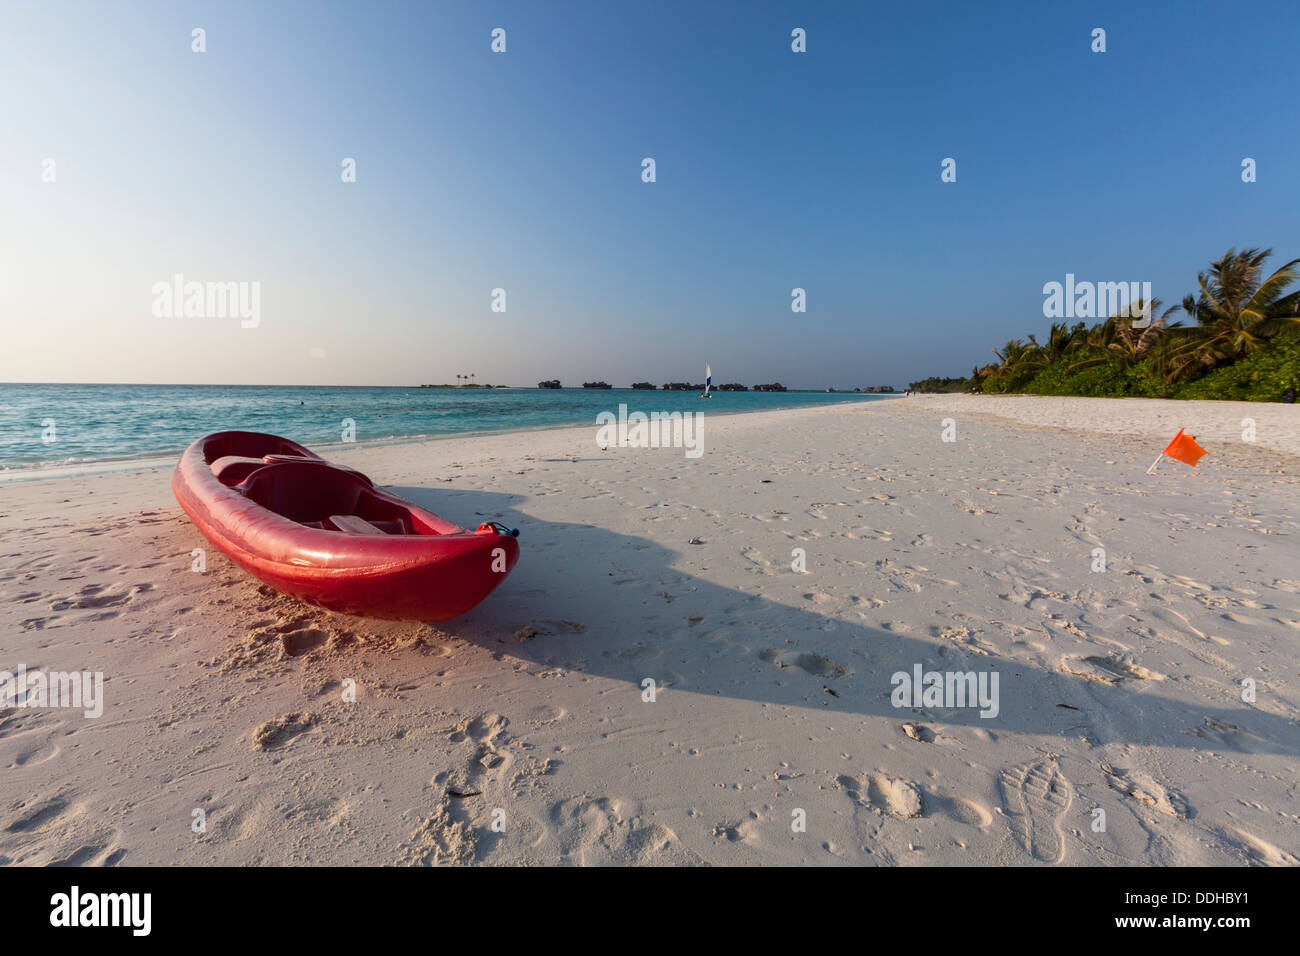 Malediven, Kanu am Strand auf der Insel Stockfoto